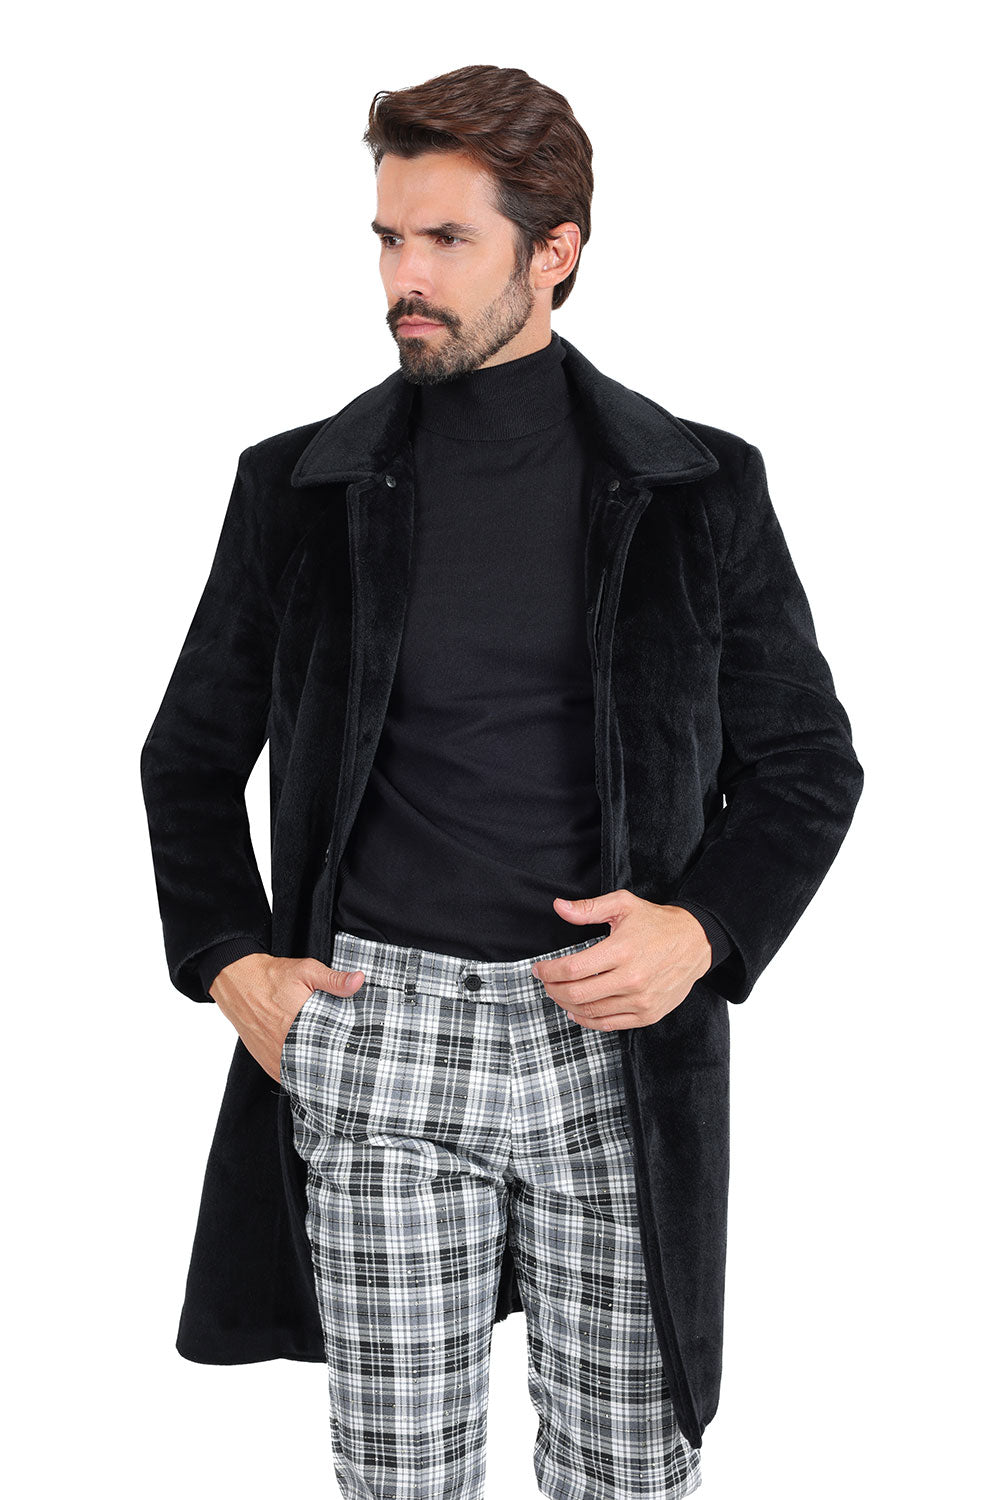 Barabas Men's Solid Color Luxury Collared Over Coat Jacket 2JLW01 Black